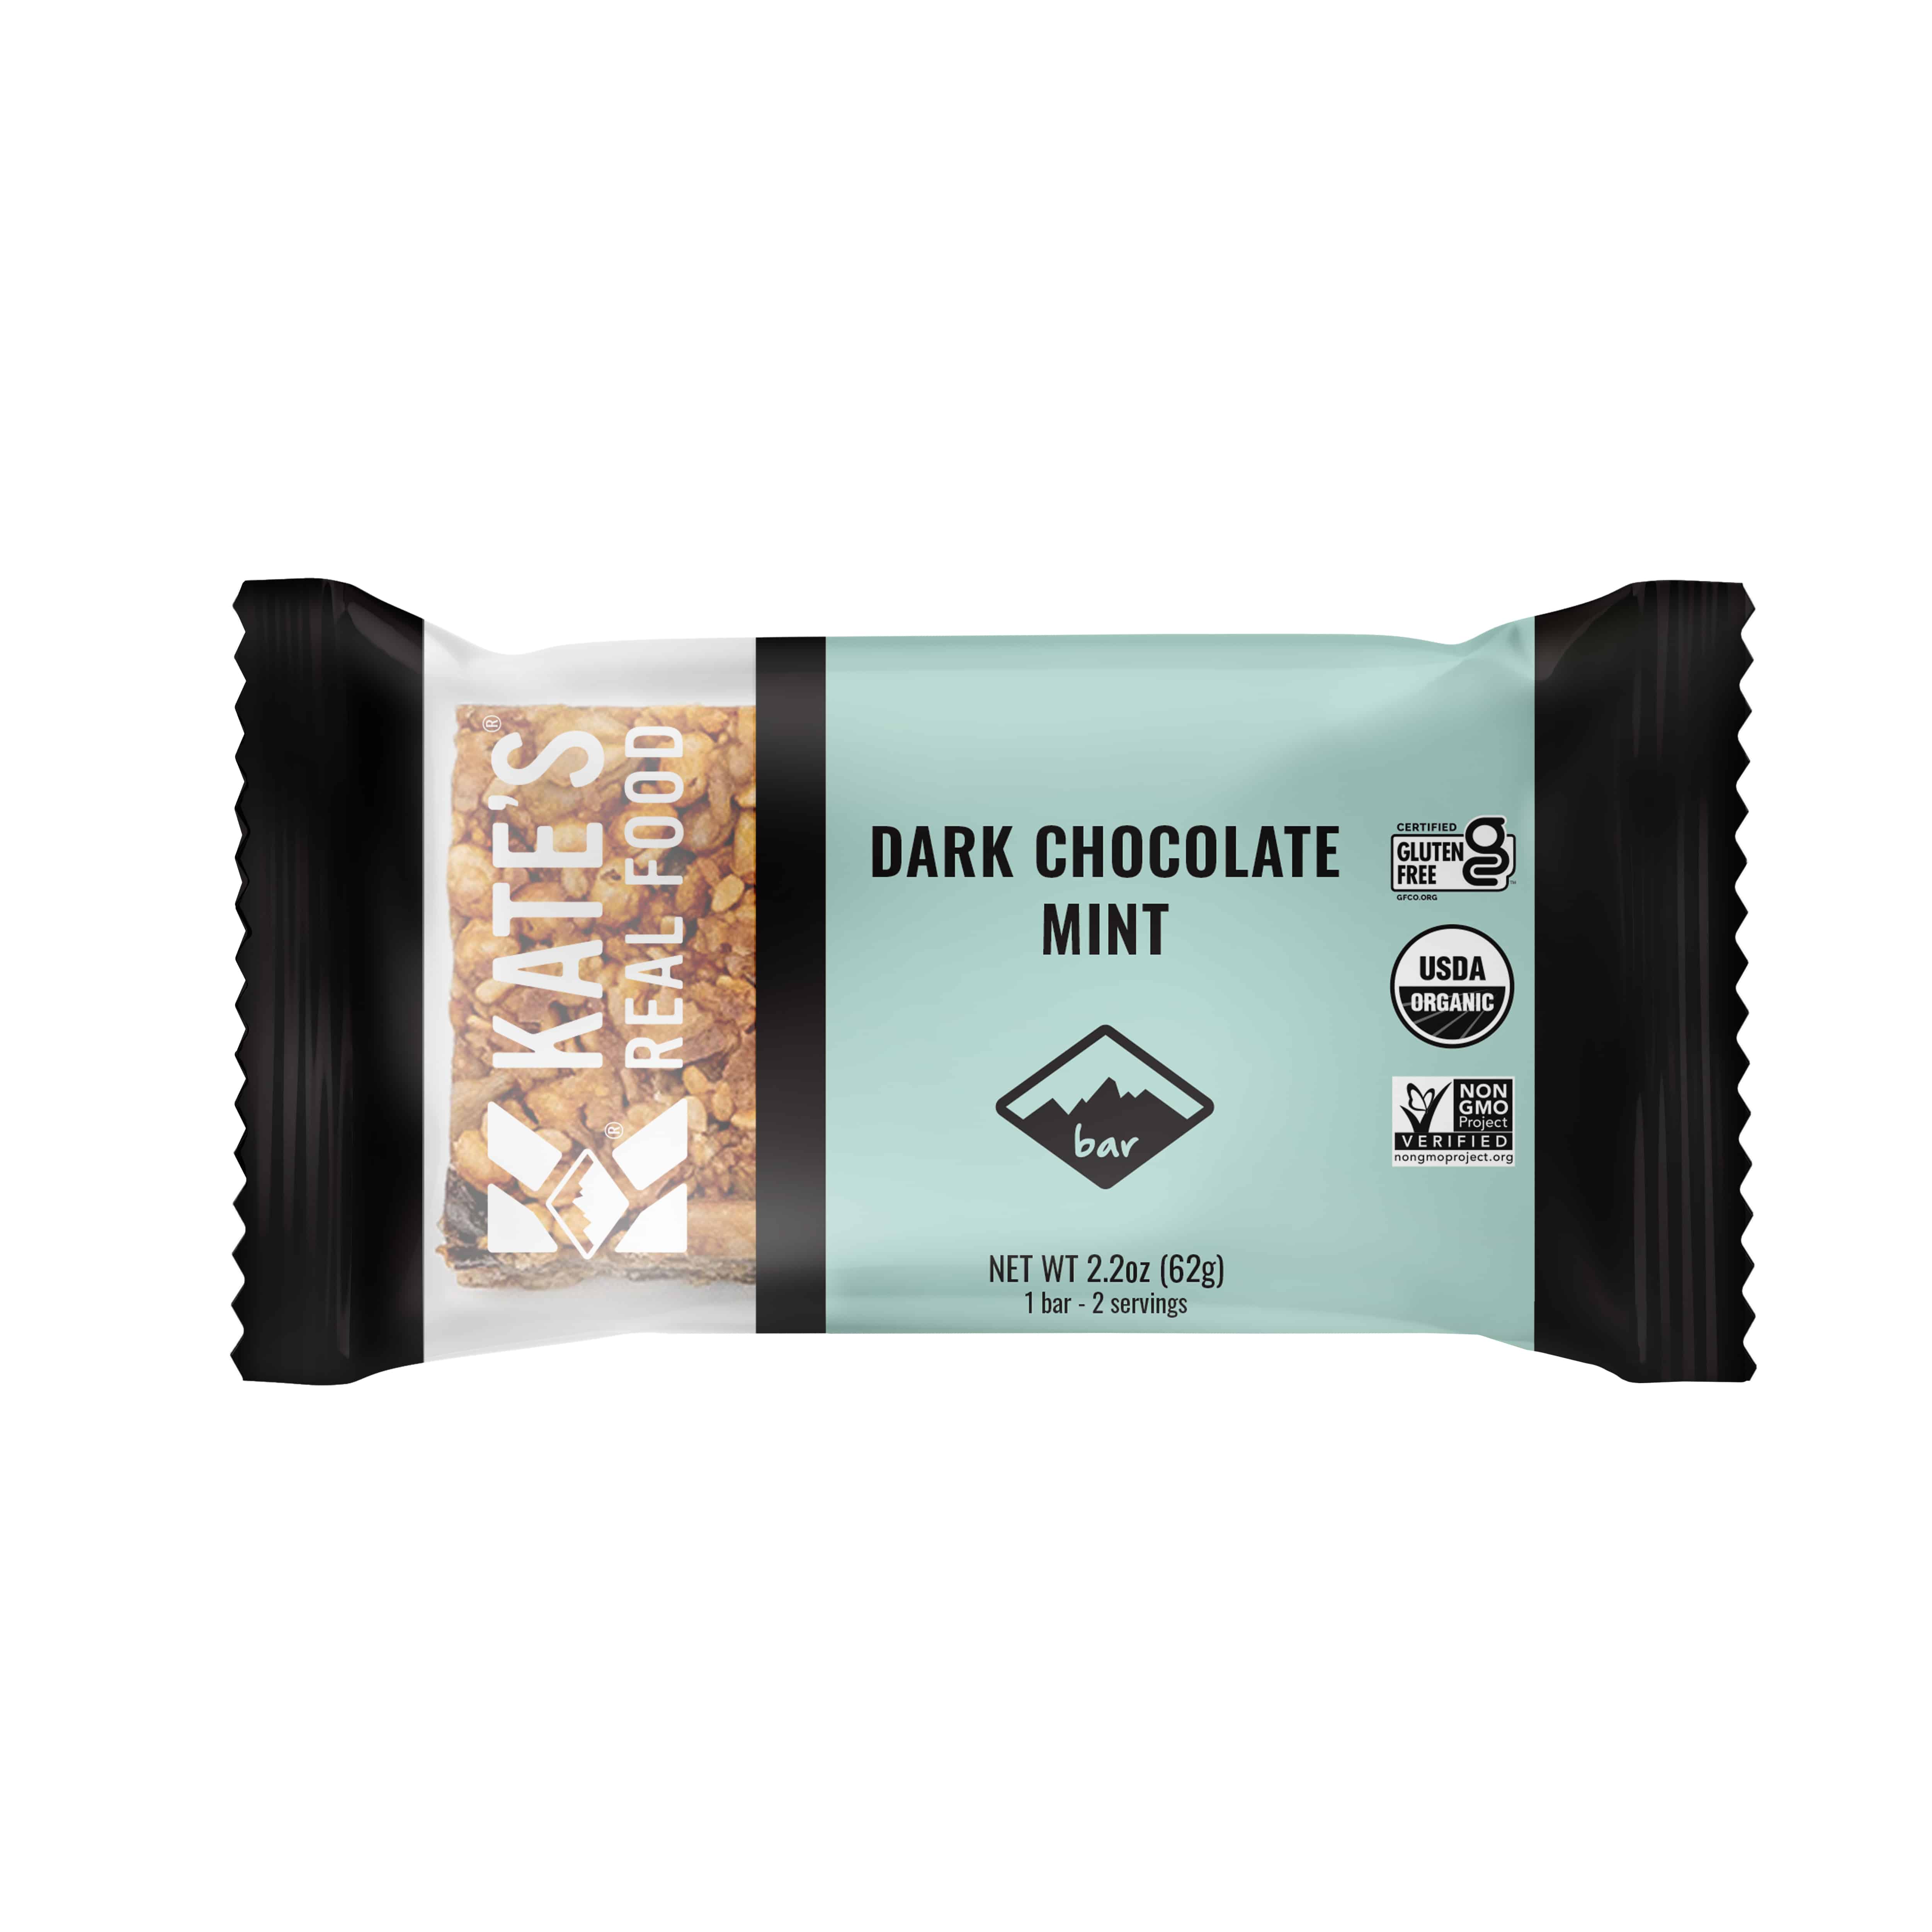 Kate's Real Food Organic Energy Bar - Dark Chocolate Mint 12 innerpacks per case 2.2 oz